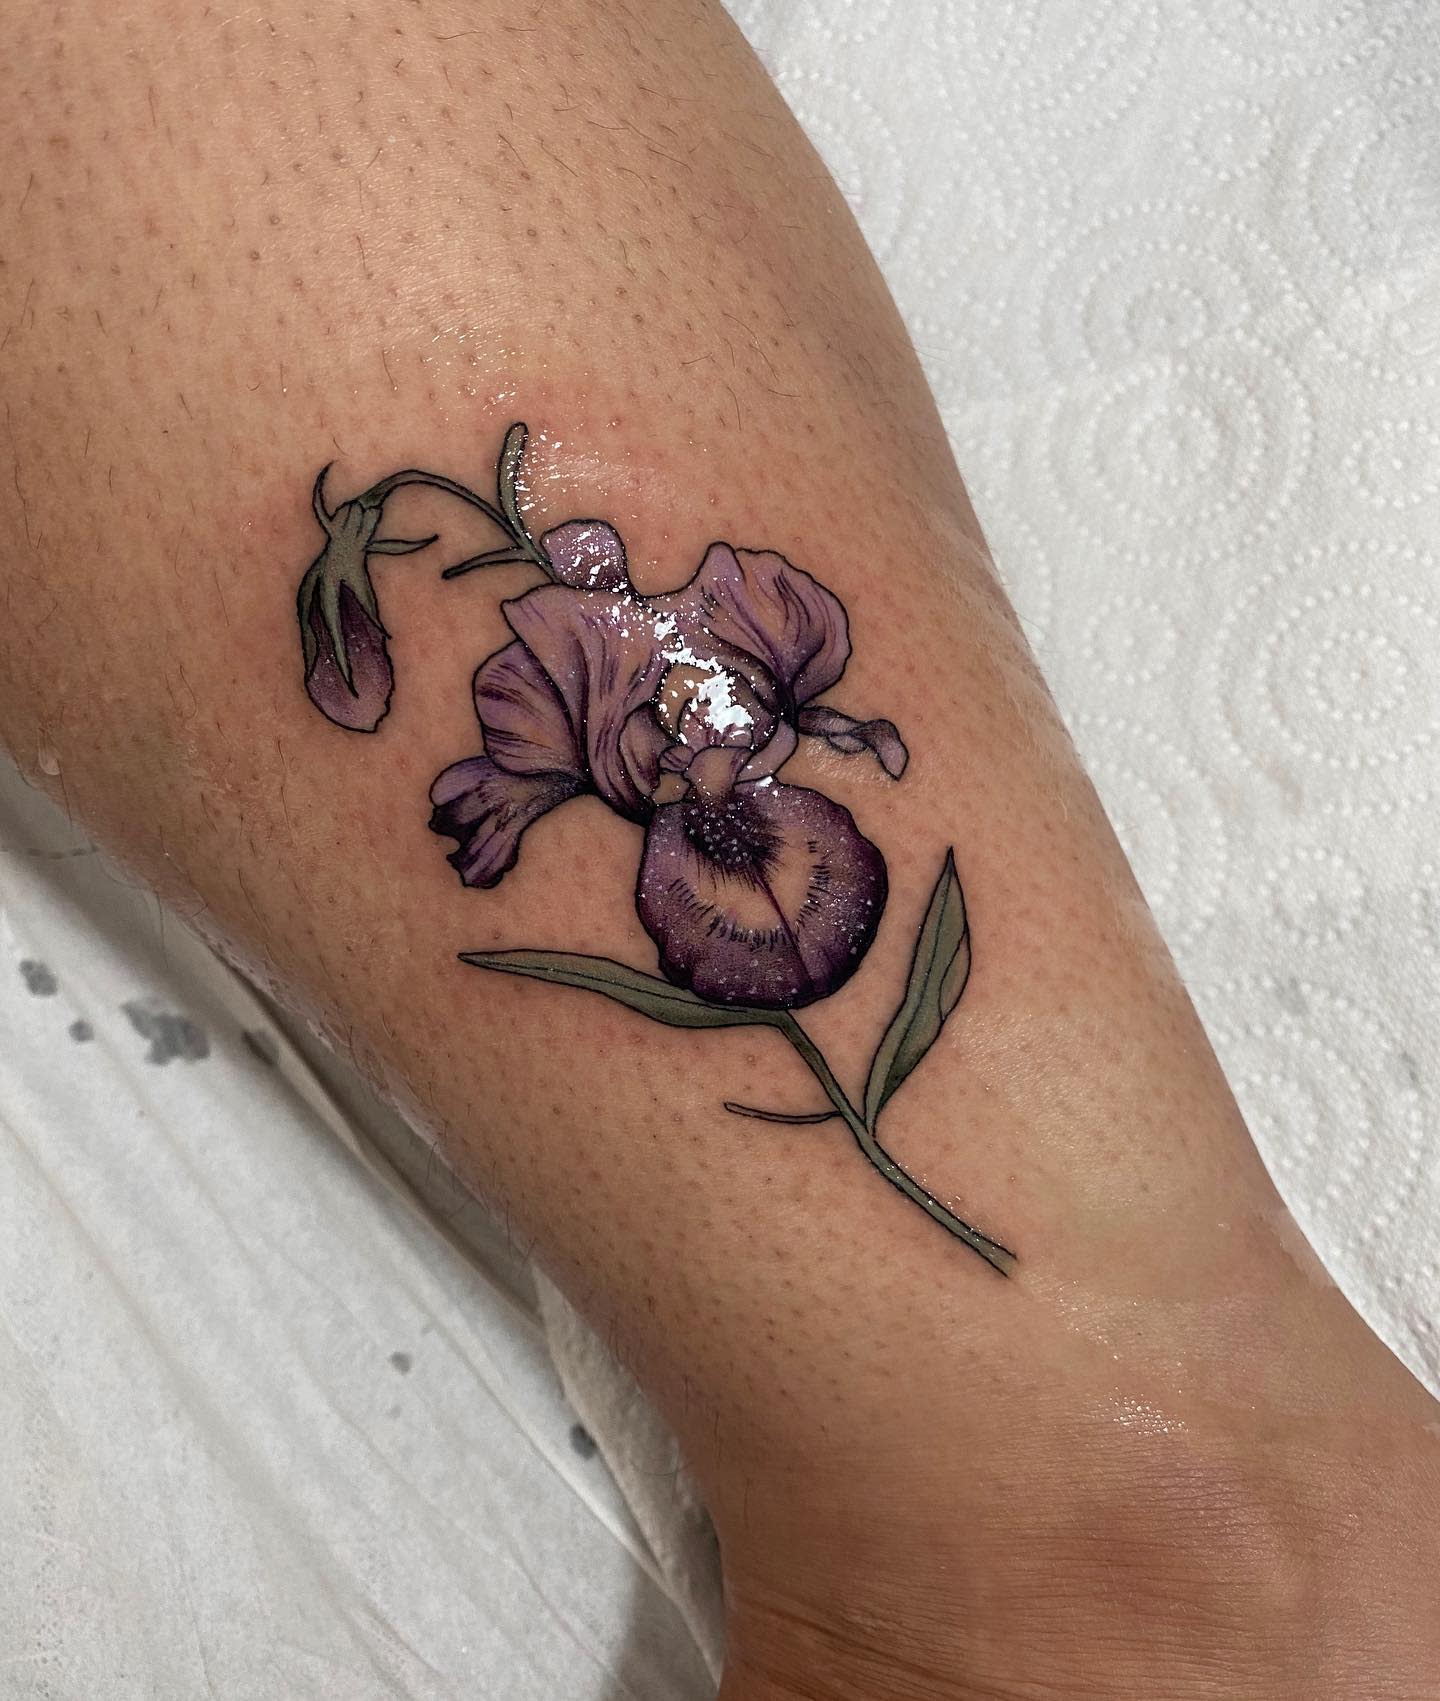 Iris flower tattoo located on the inner forearm